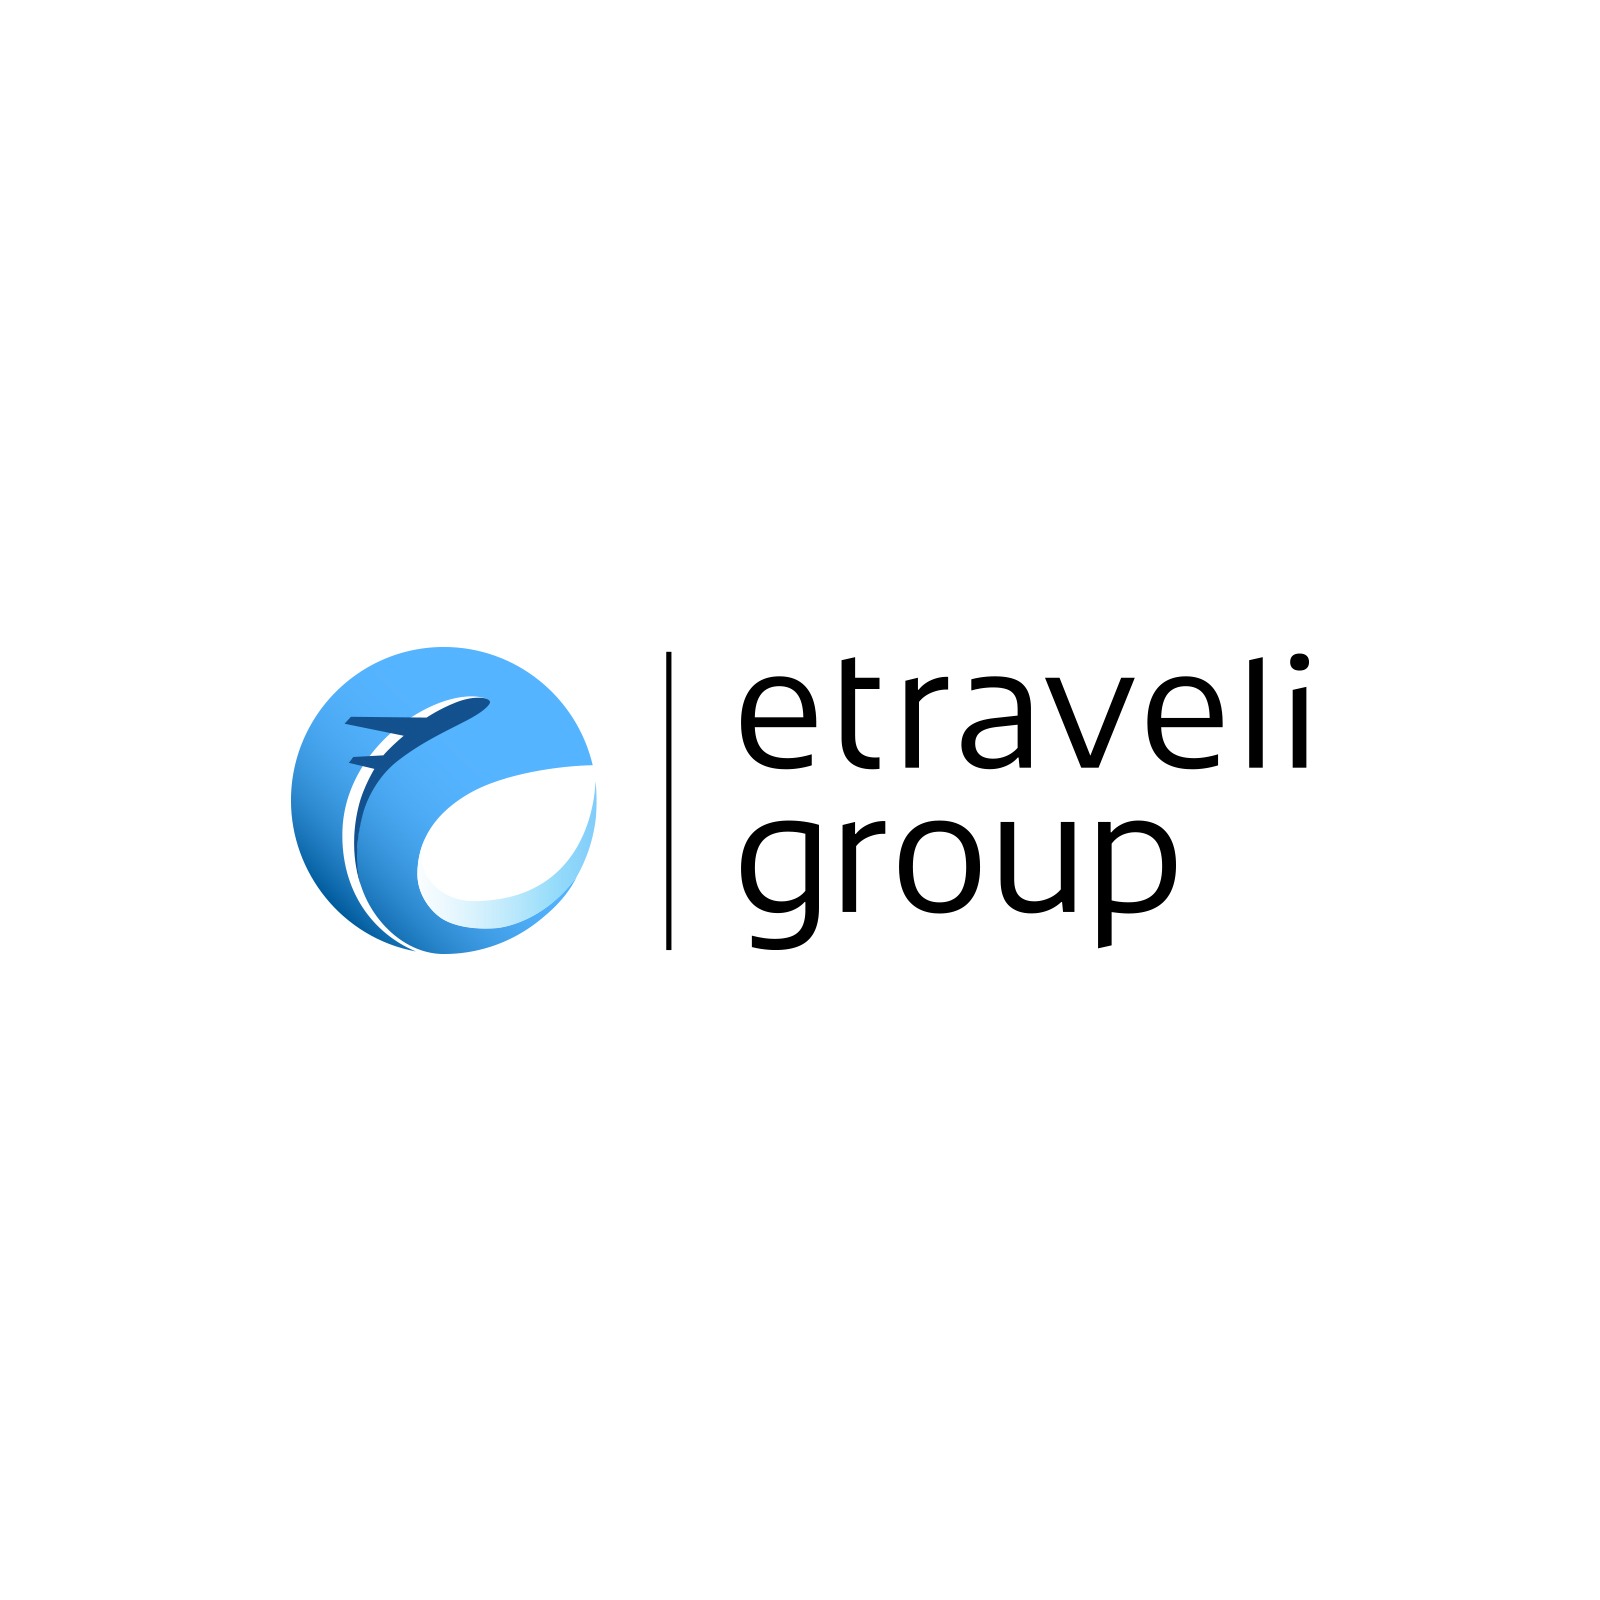 Bild på etravelis logotype